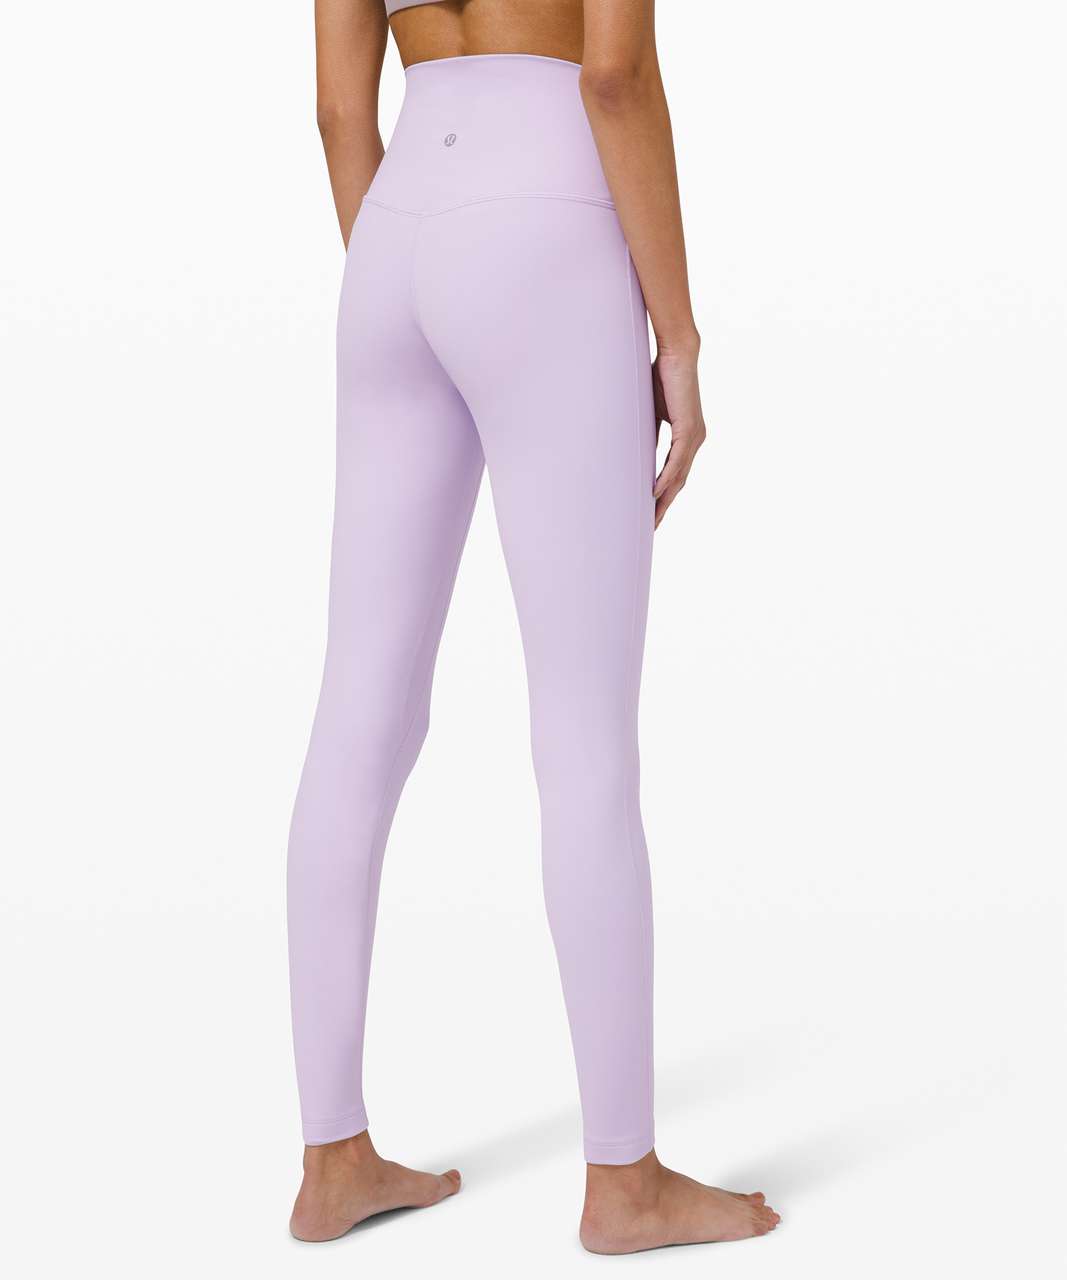 Kyodan 26” Yoga Pants/Leggings-Medium-Lavender Heather Purple - $8 - From  Staci